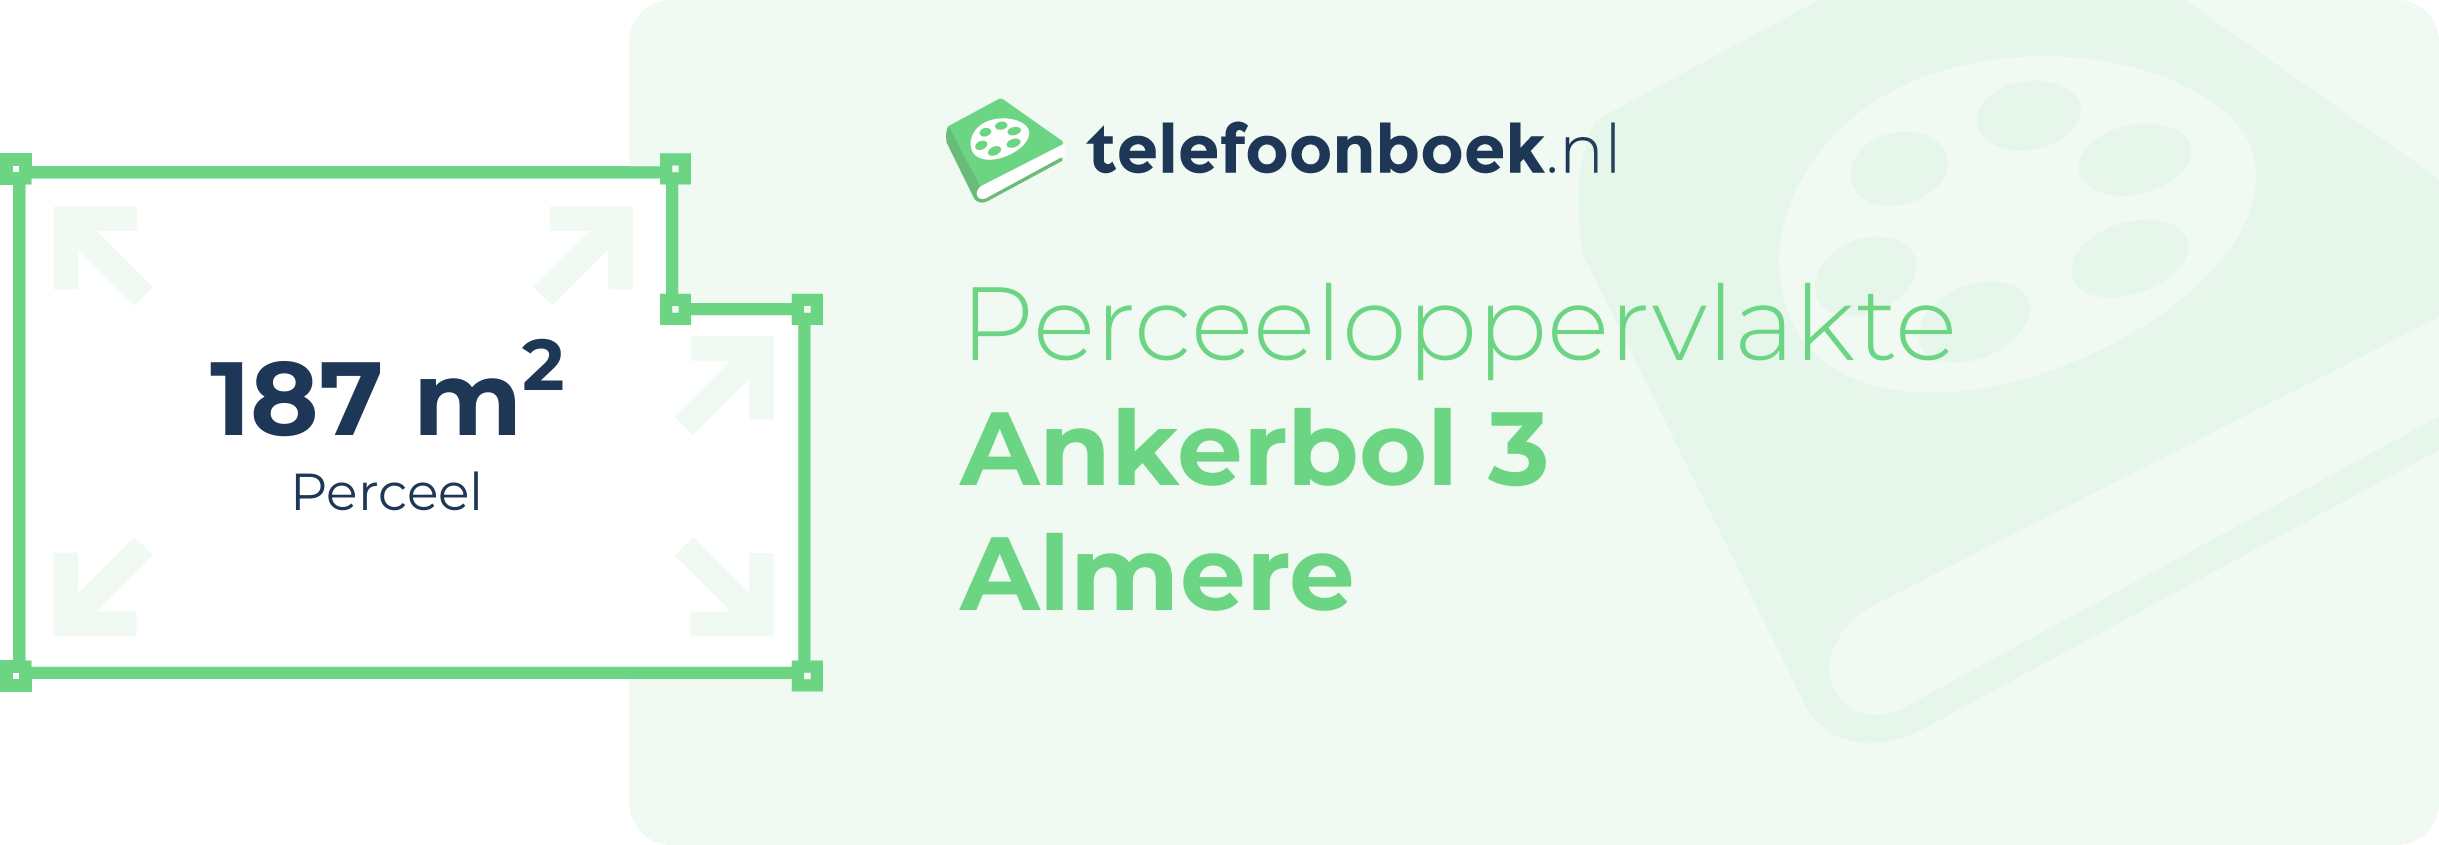 Perceeloppervlakte Ankerbol 3 Almere